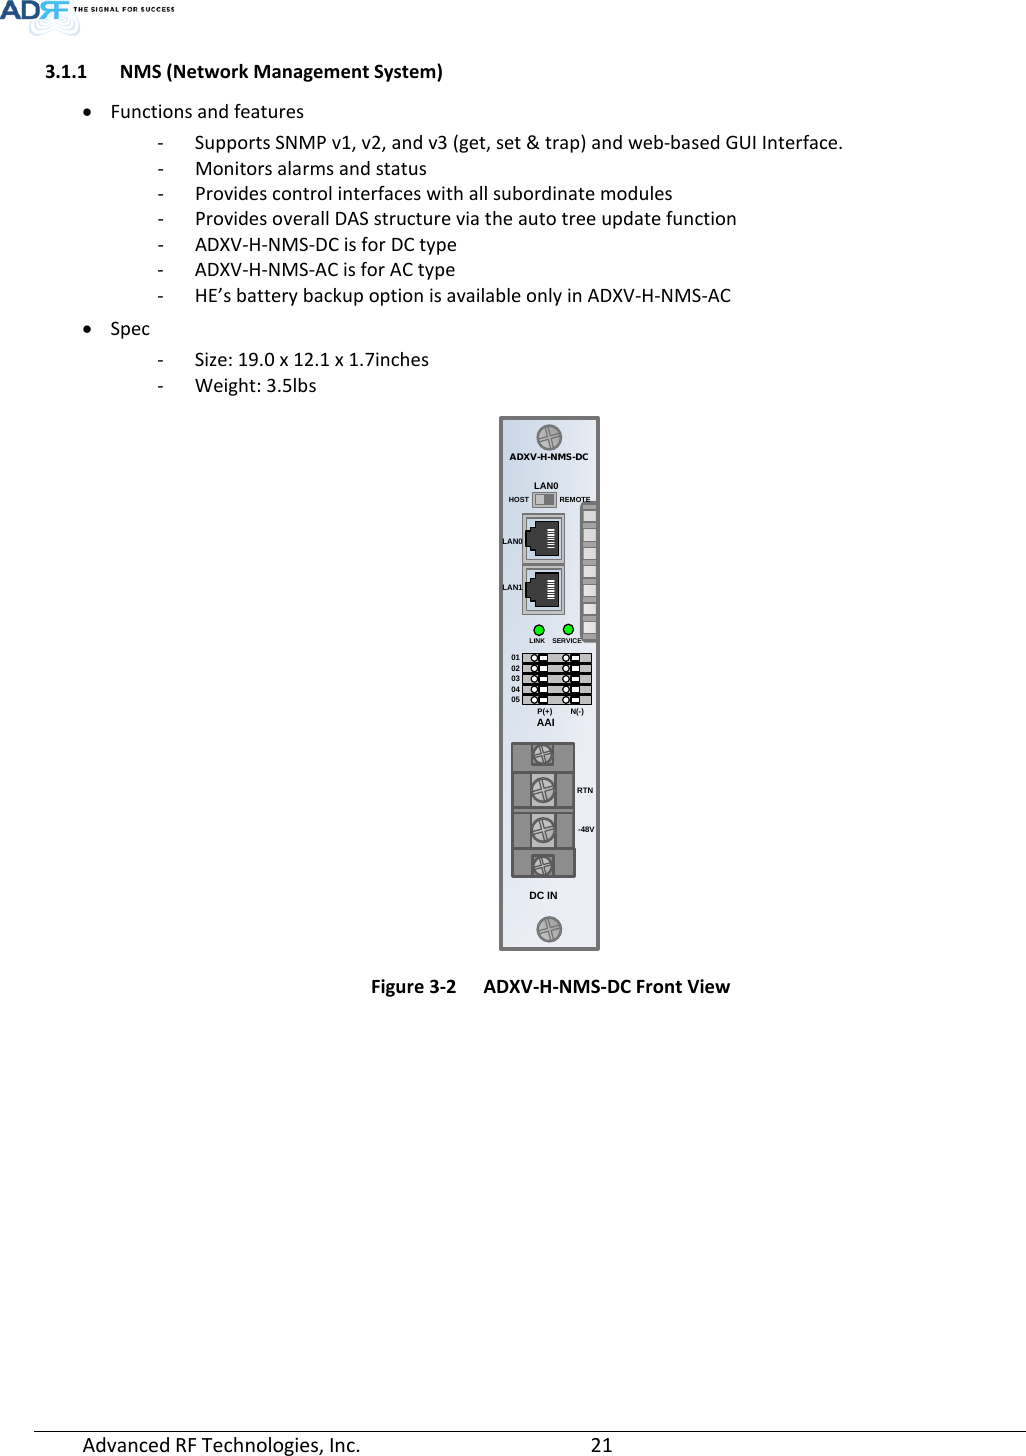 Page 21 of ADRF KOREA ADXV-R-336 DAS (Distributed Antenna System) User Manual ADXV DAS